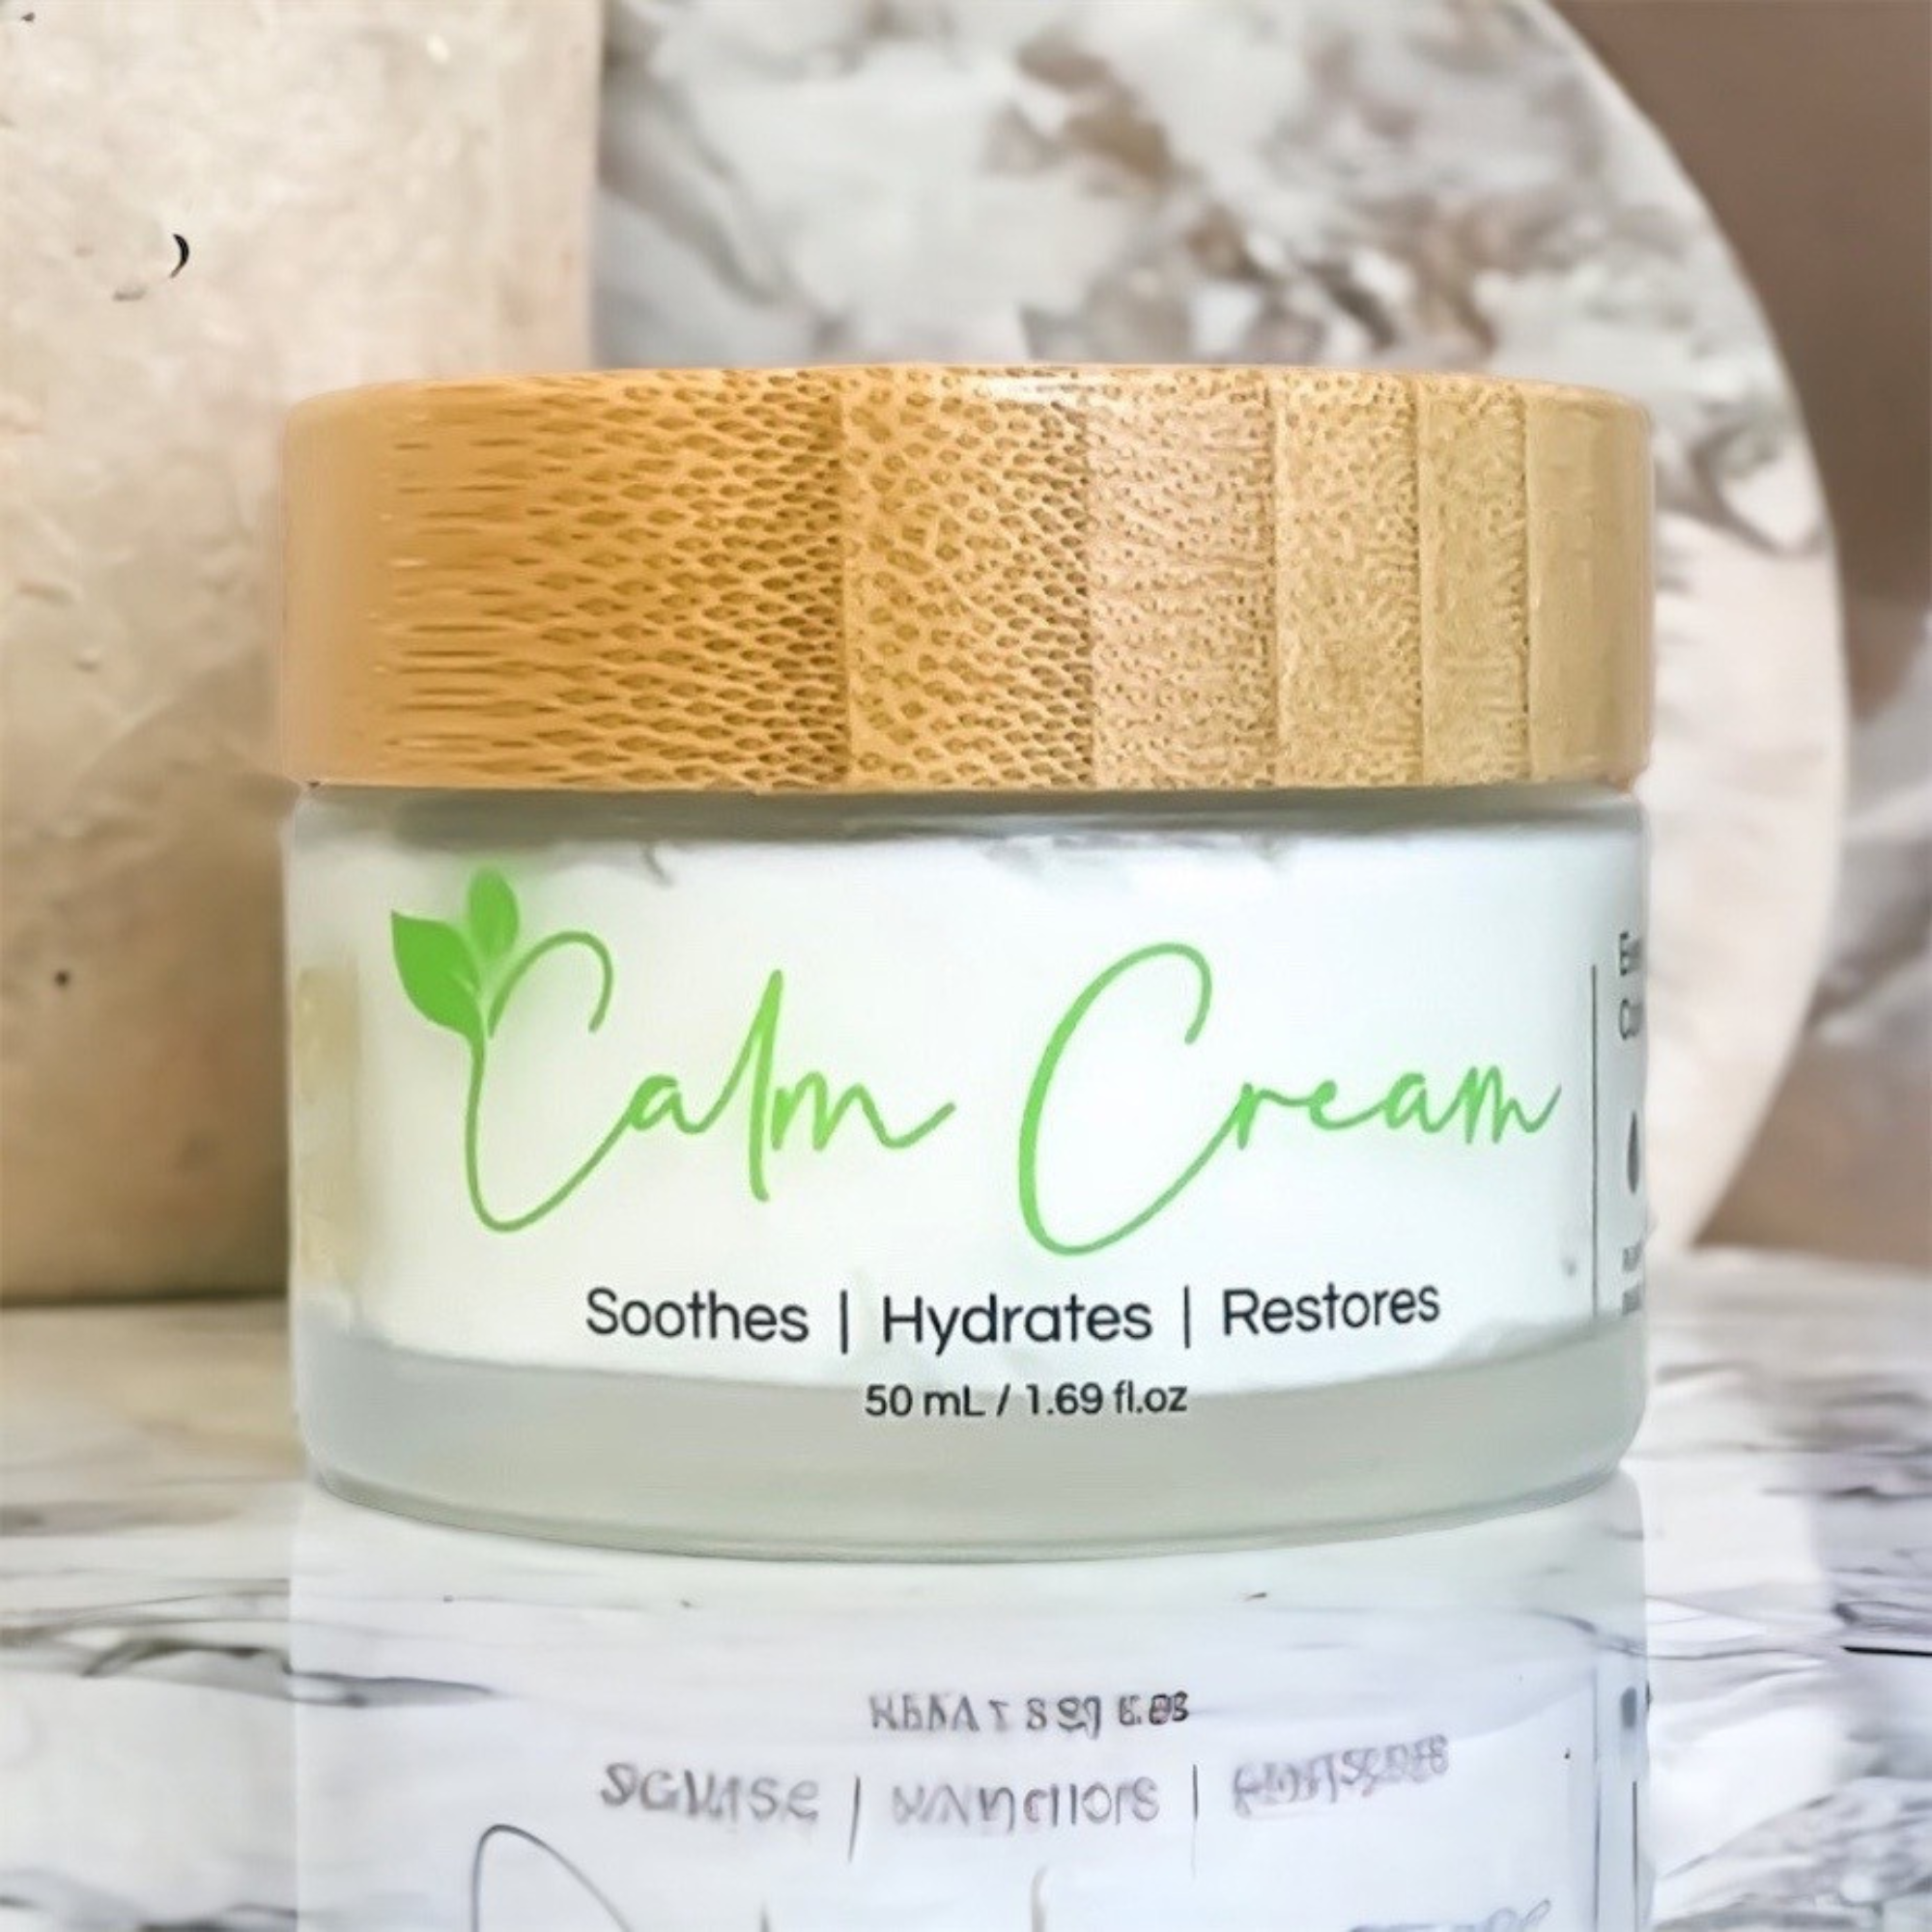 Calm Cream 50 mL Jar with Bamboo Lid Clean Skincare